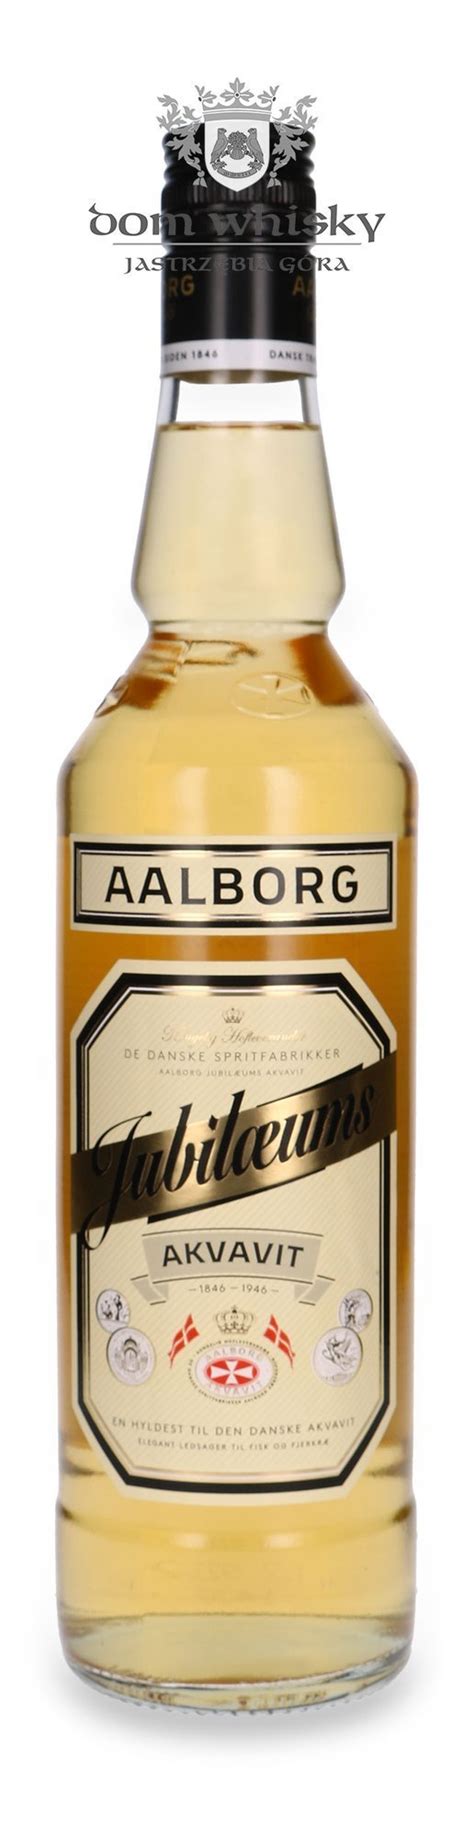 Aalborg jubiläums akvavit 2 cl € 3.80 aalborg dild akvavit 2 cl € 3.80 lysholm no ∙ 52 2 cl € 4.30 linie aquavit 2 cl € 3.80 linie aquavit madeira cask 2 cl € 4.60 bier € kronen premium exquisit a4 0.3 l € 4.20 draught beer | pils vom fass | bière pression carlsberg bier a4 0.3 l € 4.20 Aalborg Jubilaeums Akvavit / 40% / 0,7l | Dom Whisky